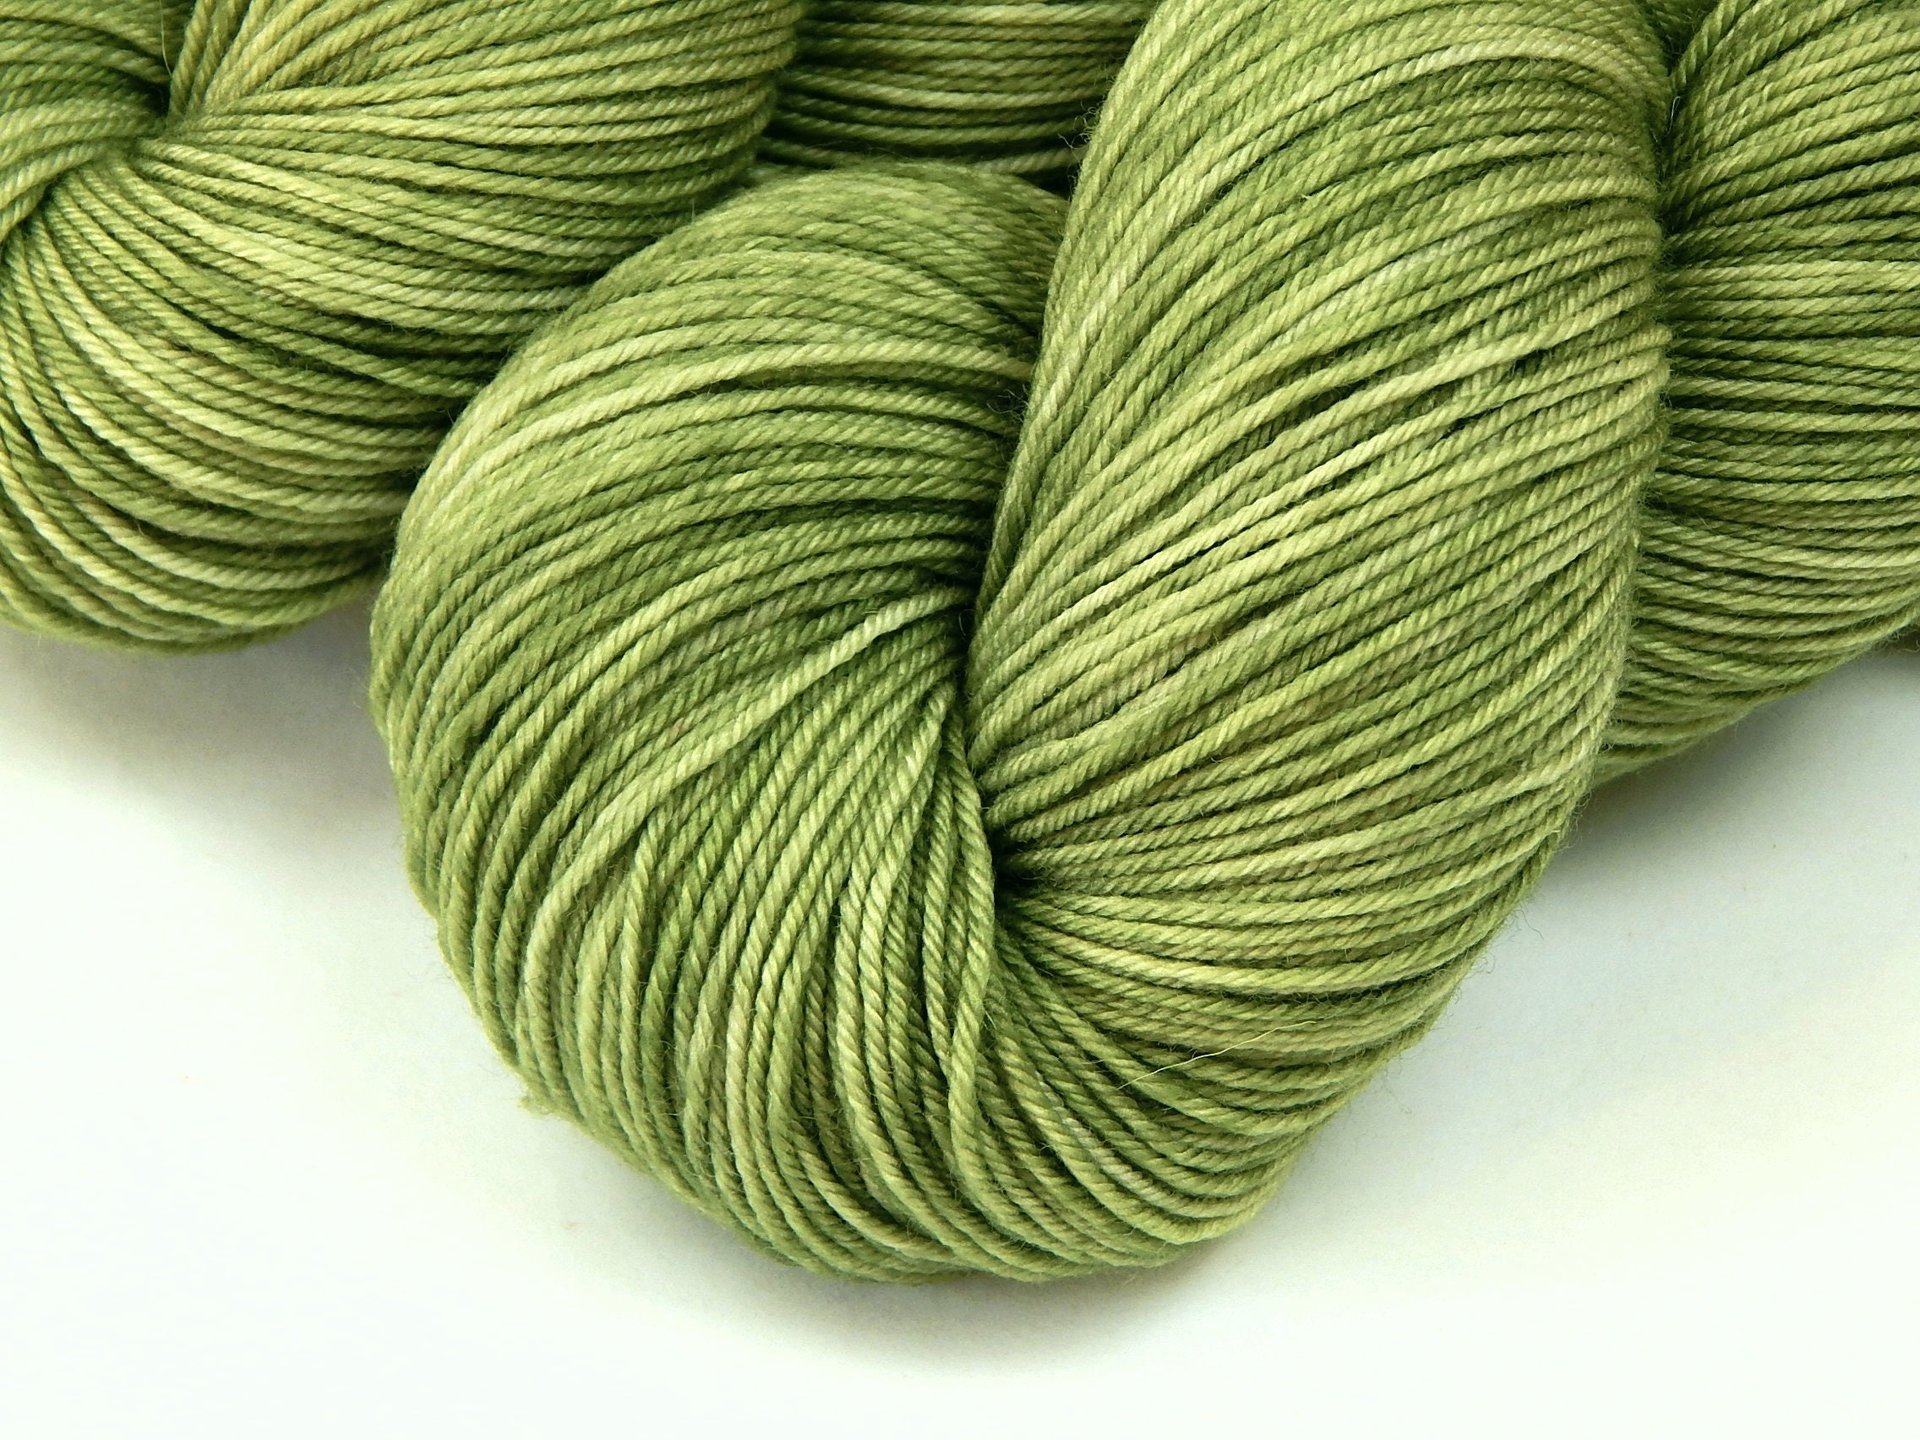 Hand Dyed Sock Yarn, Fingering Weight 4 Ply Superwash Merino Wool - Green Tea - Light Olive Knitting Yarn, Avocado Hand Dyed Yarn